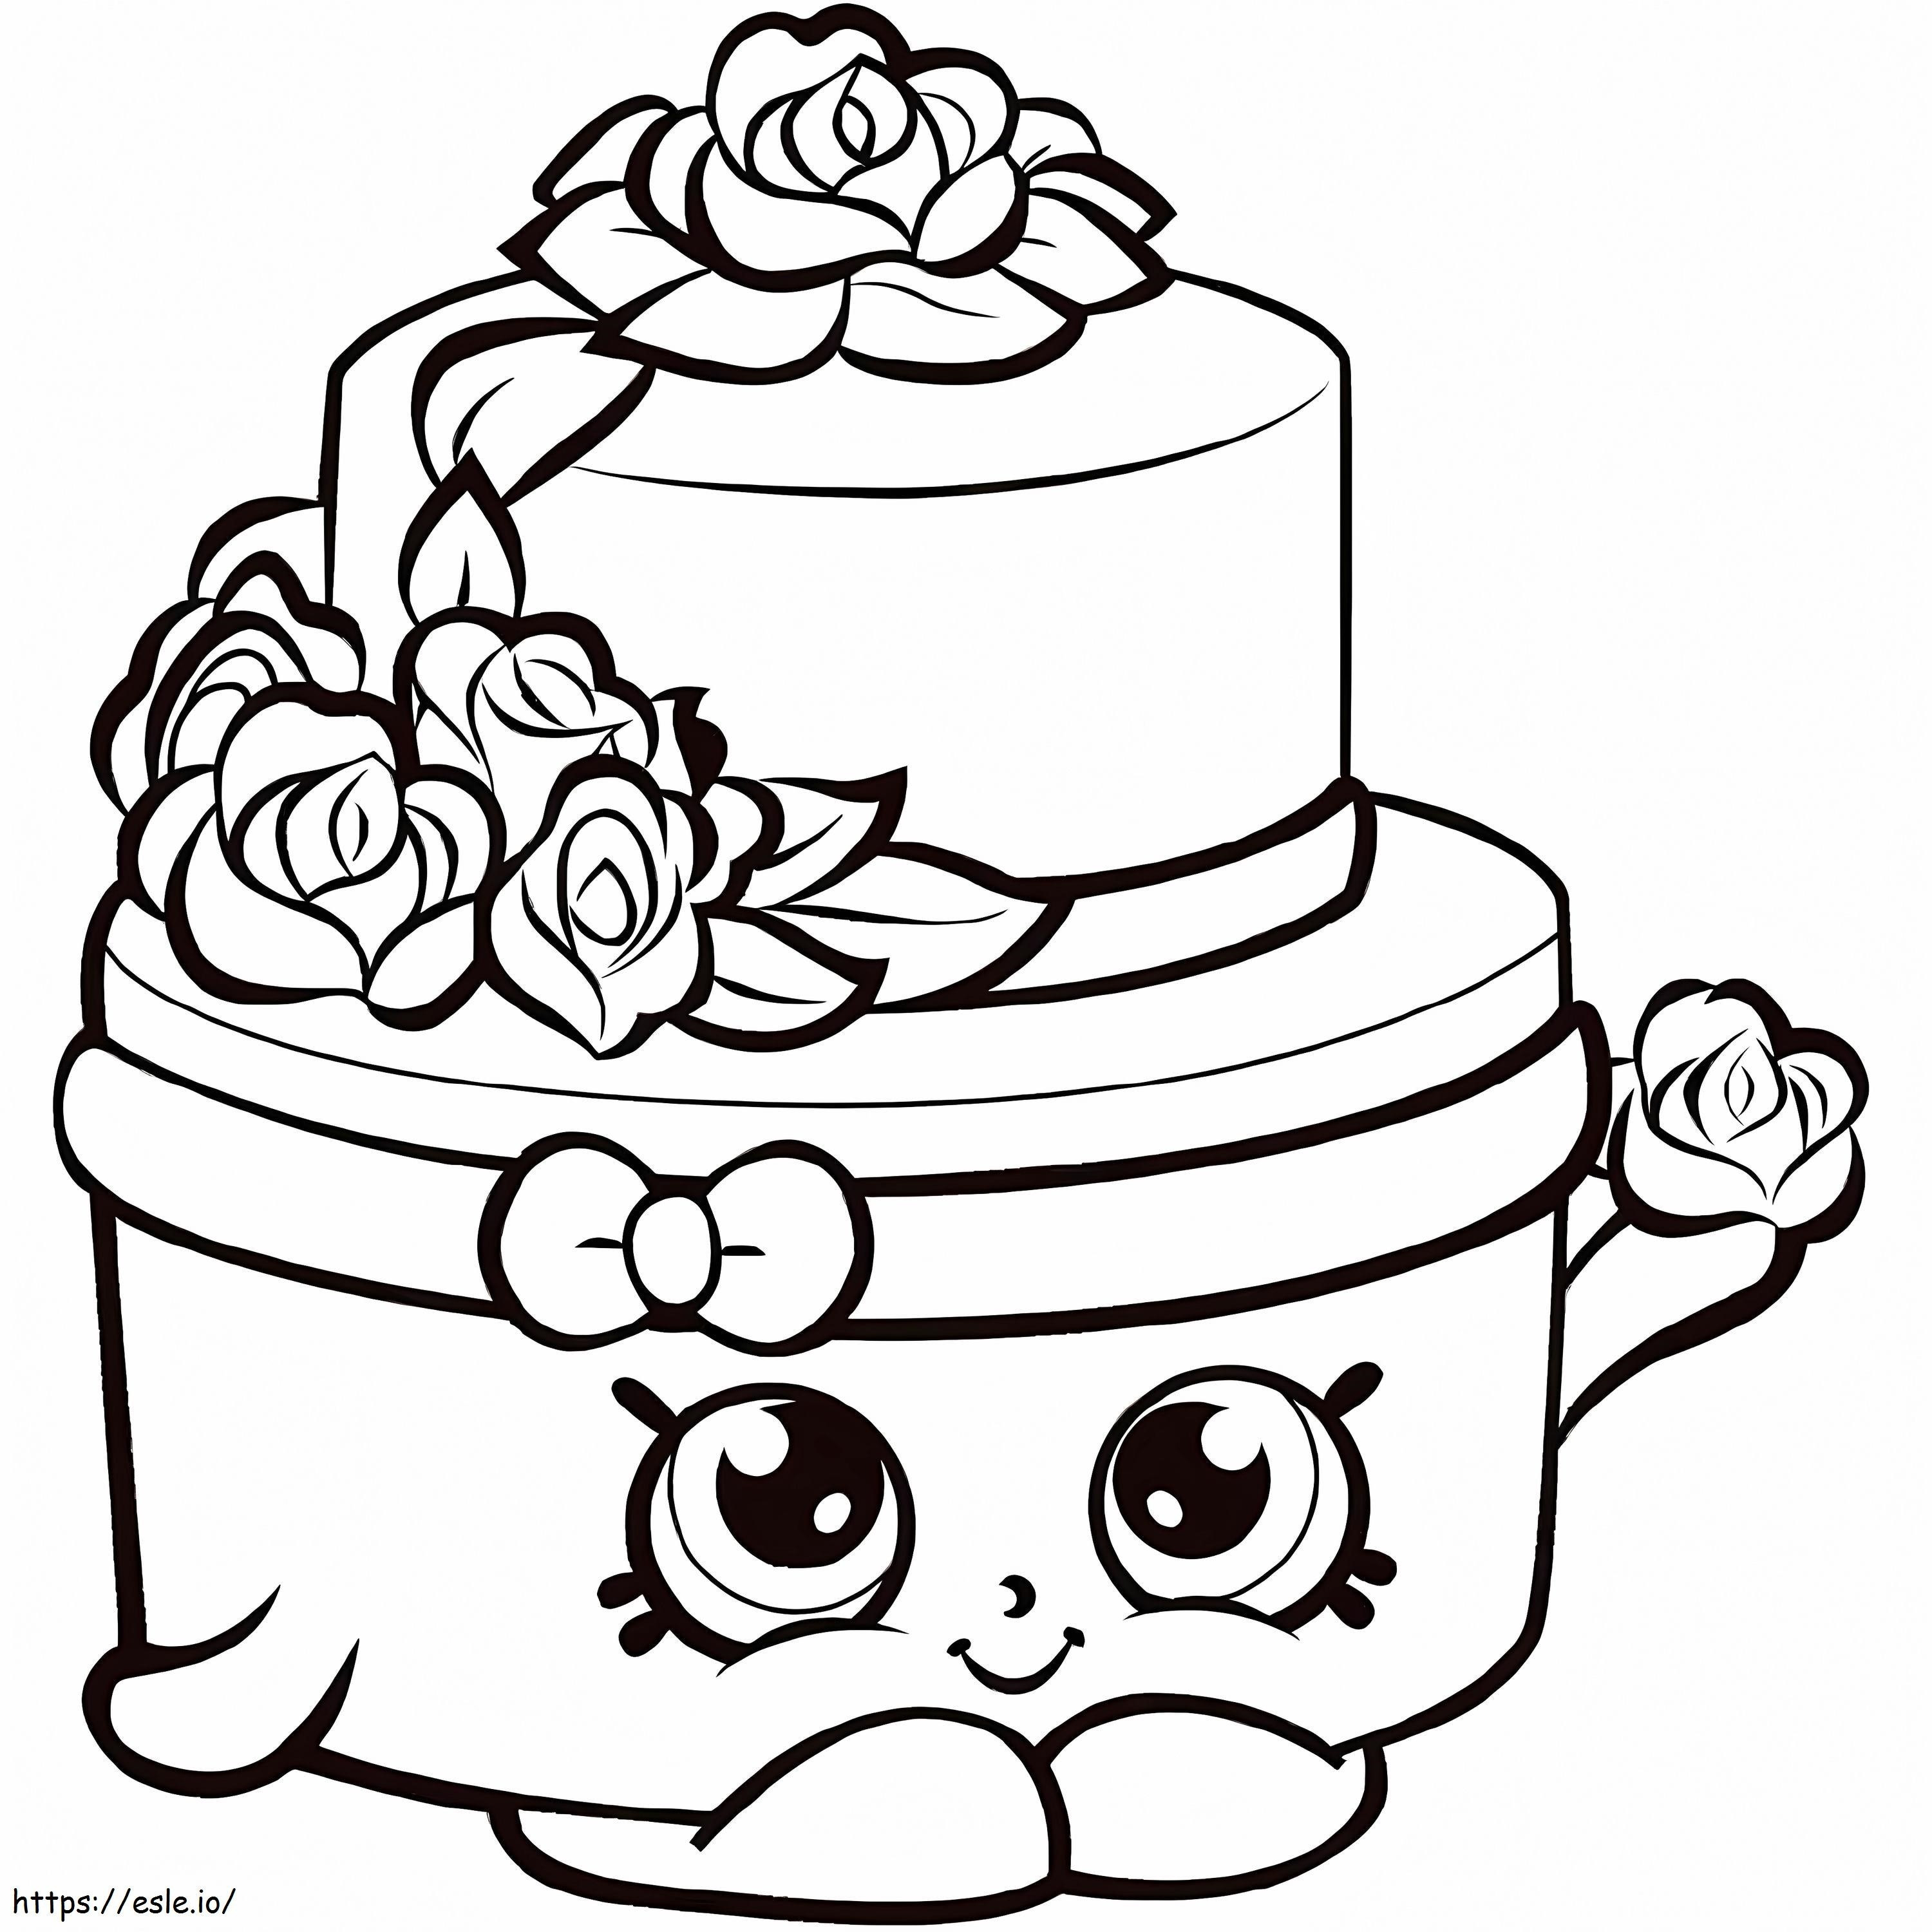 Wonda Shopkin Wedding Cake coloring page